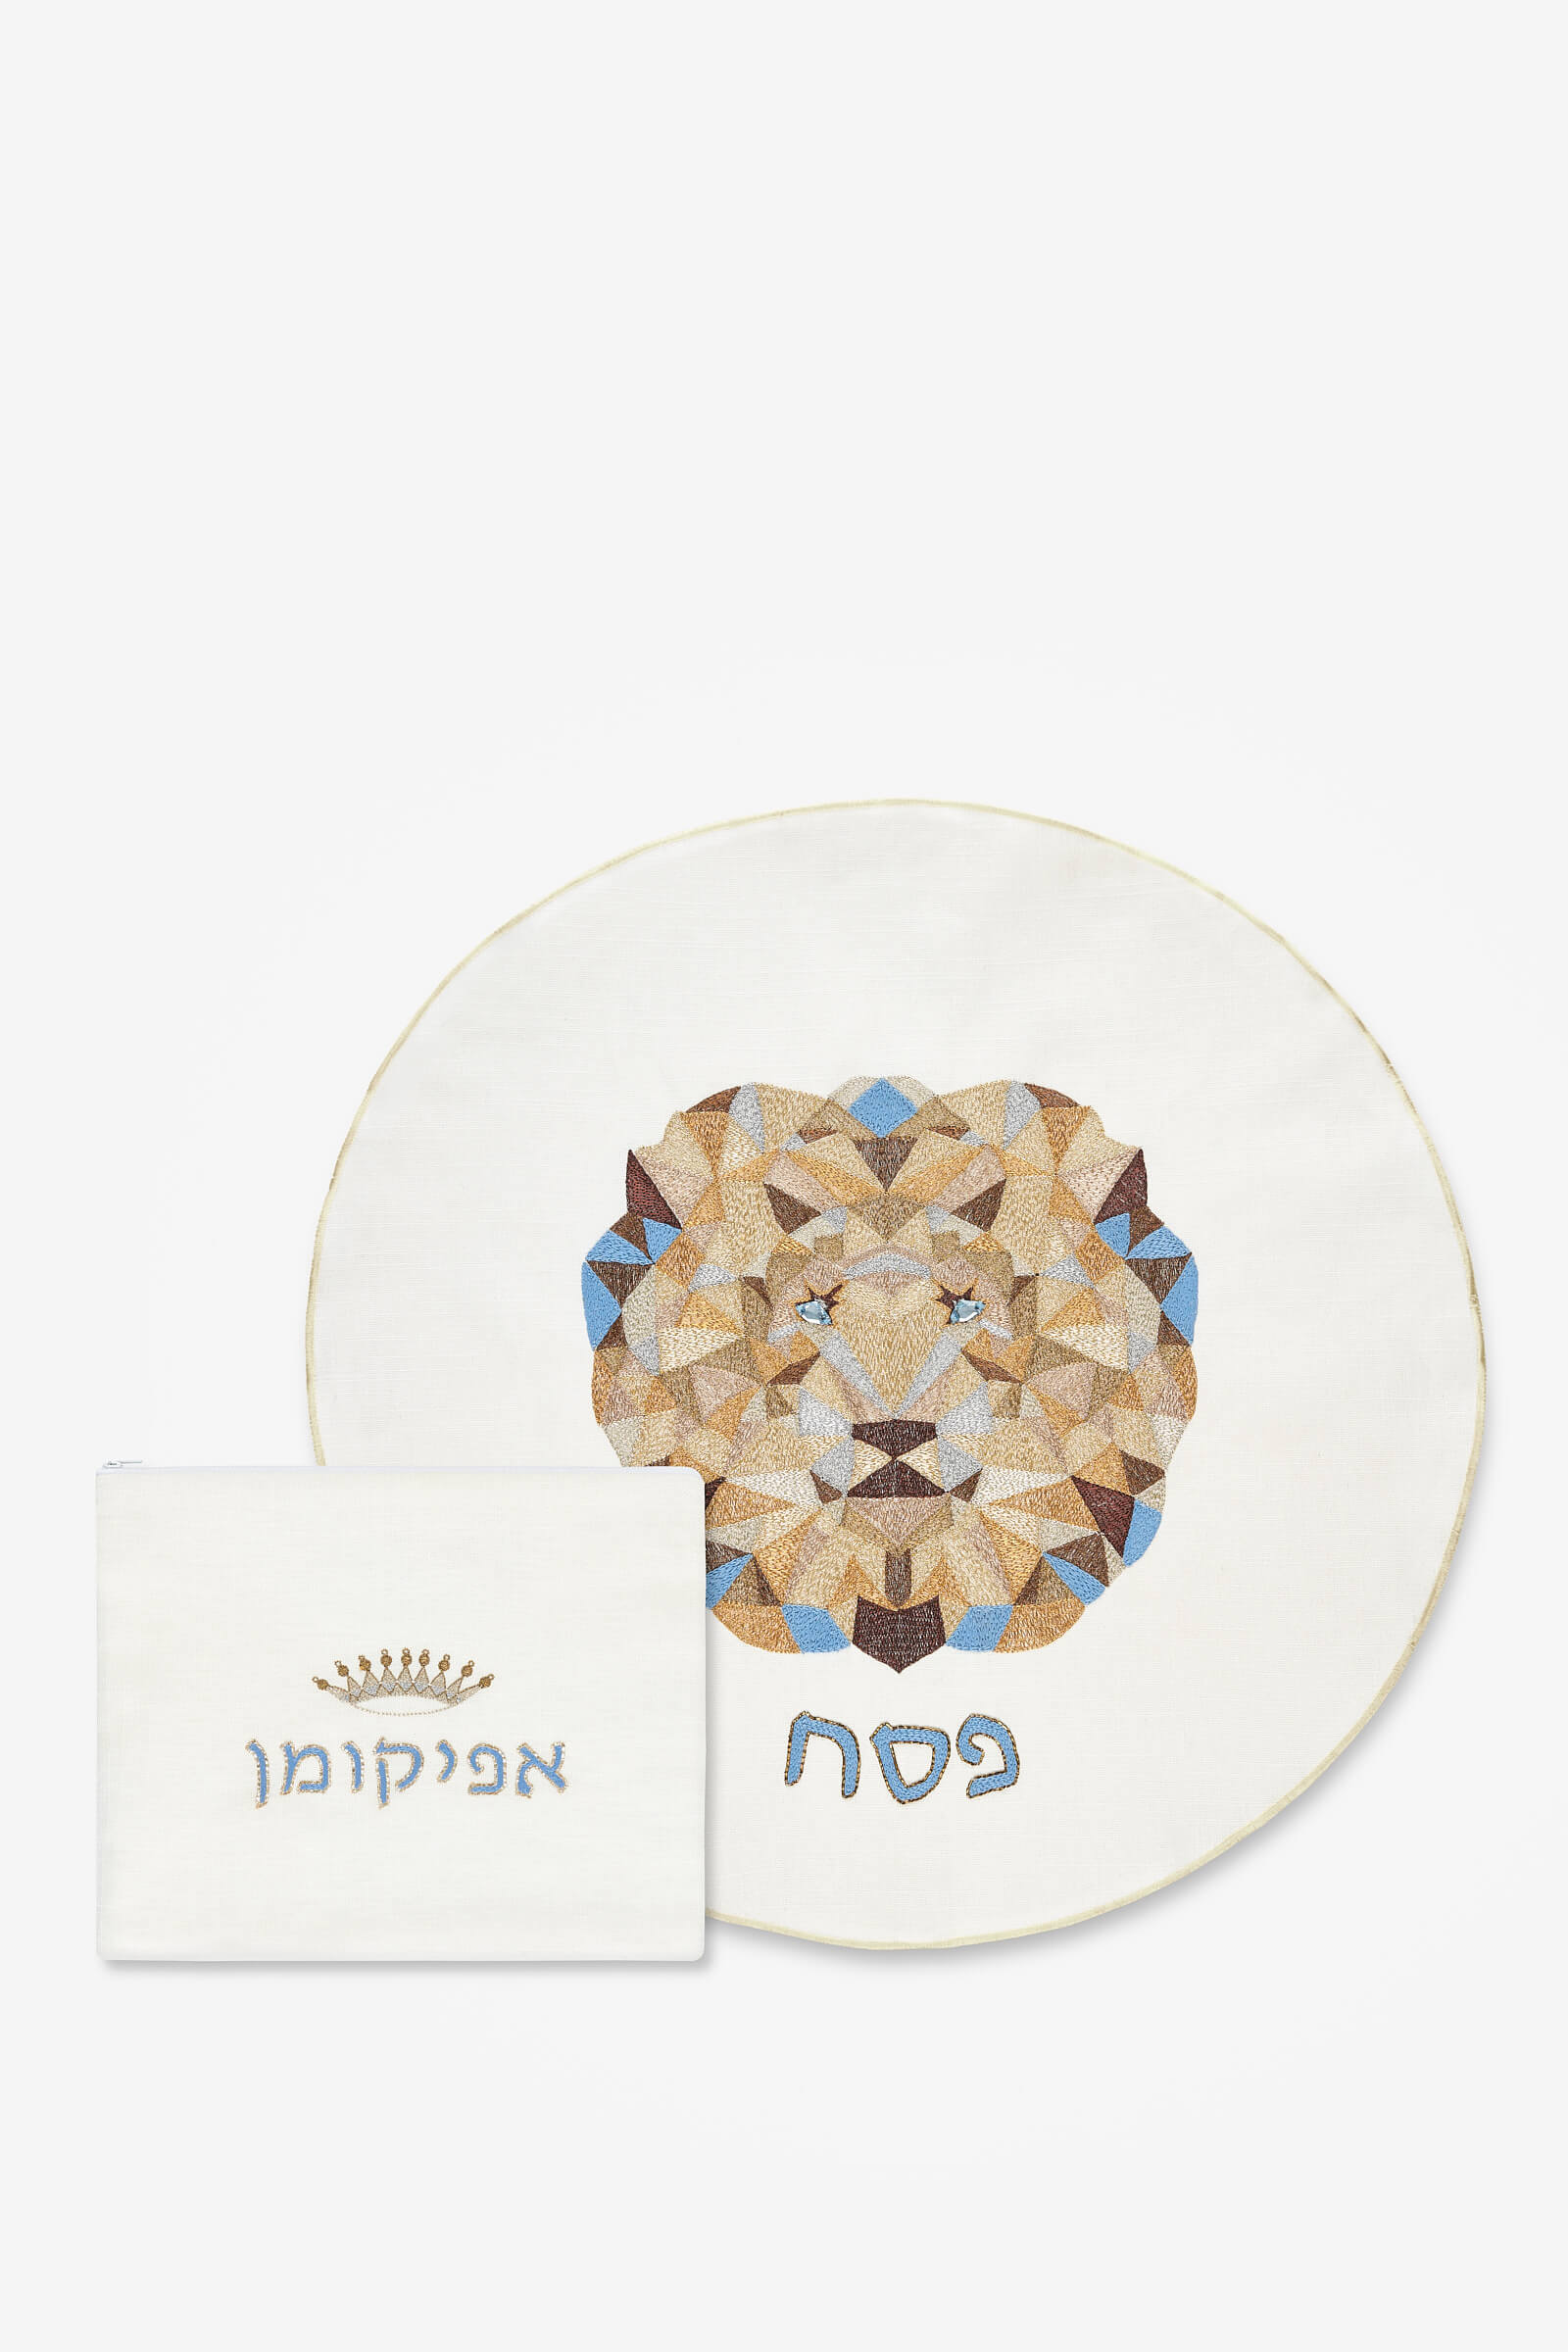 Judah Passover Set, Lion